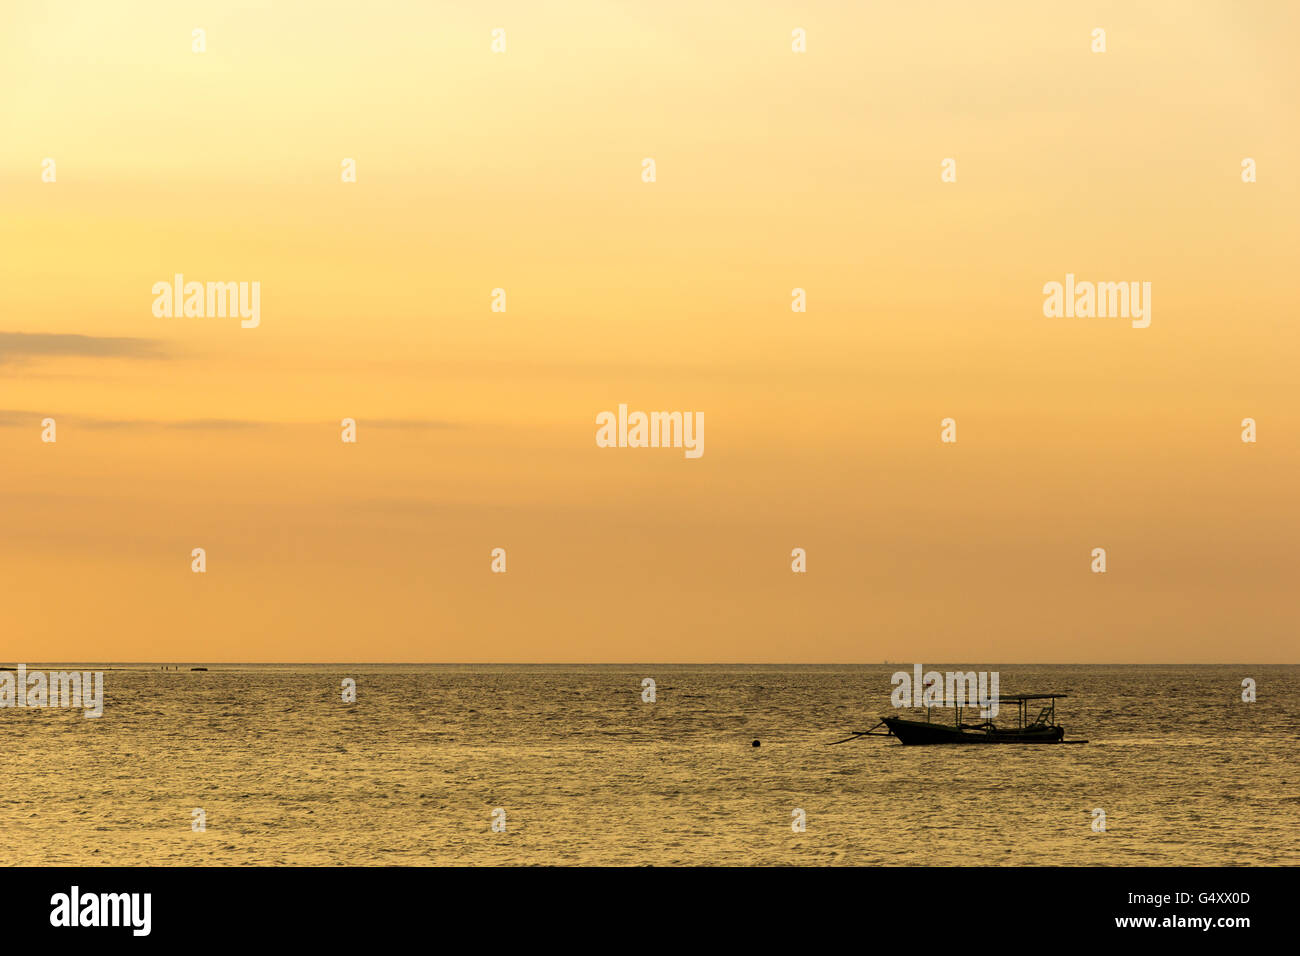 Indonesia, Nusa Tenggara Barat, Lombok Utara, boats on the island of Pulau Gili Meno at sunset Stock Photo